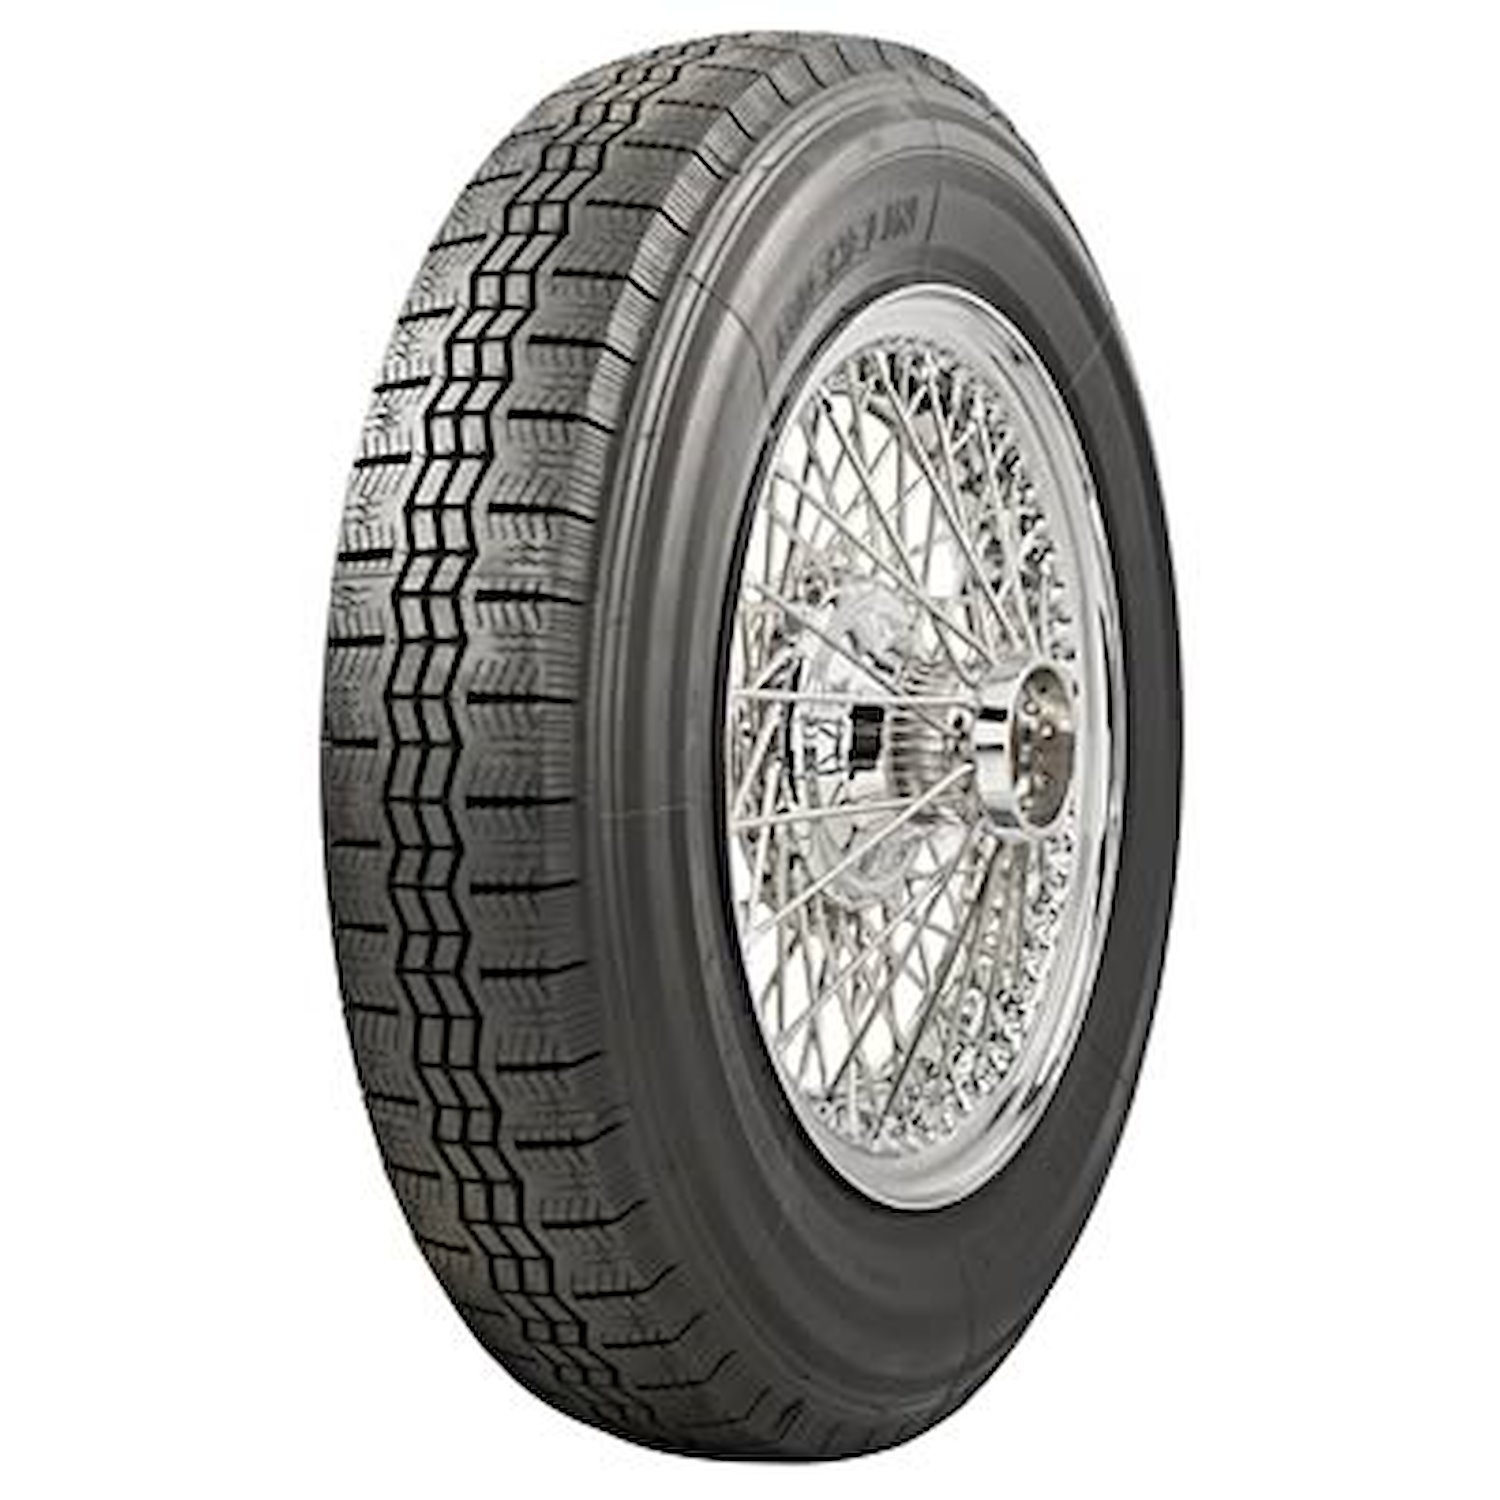 631782 Tire, Michelin X Radial, 145R400 79S